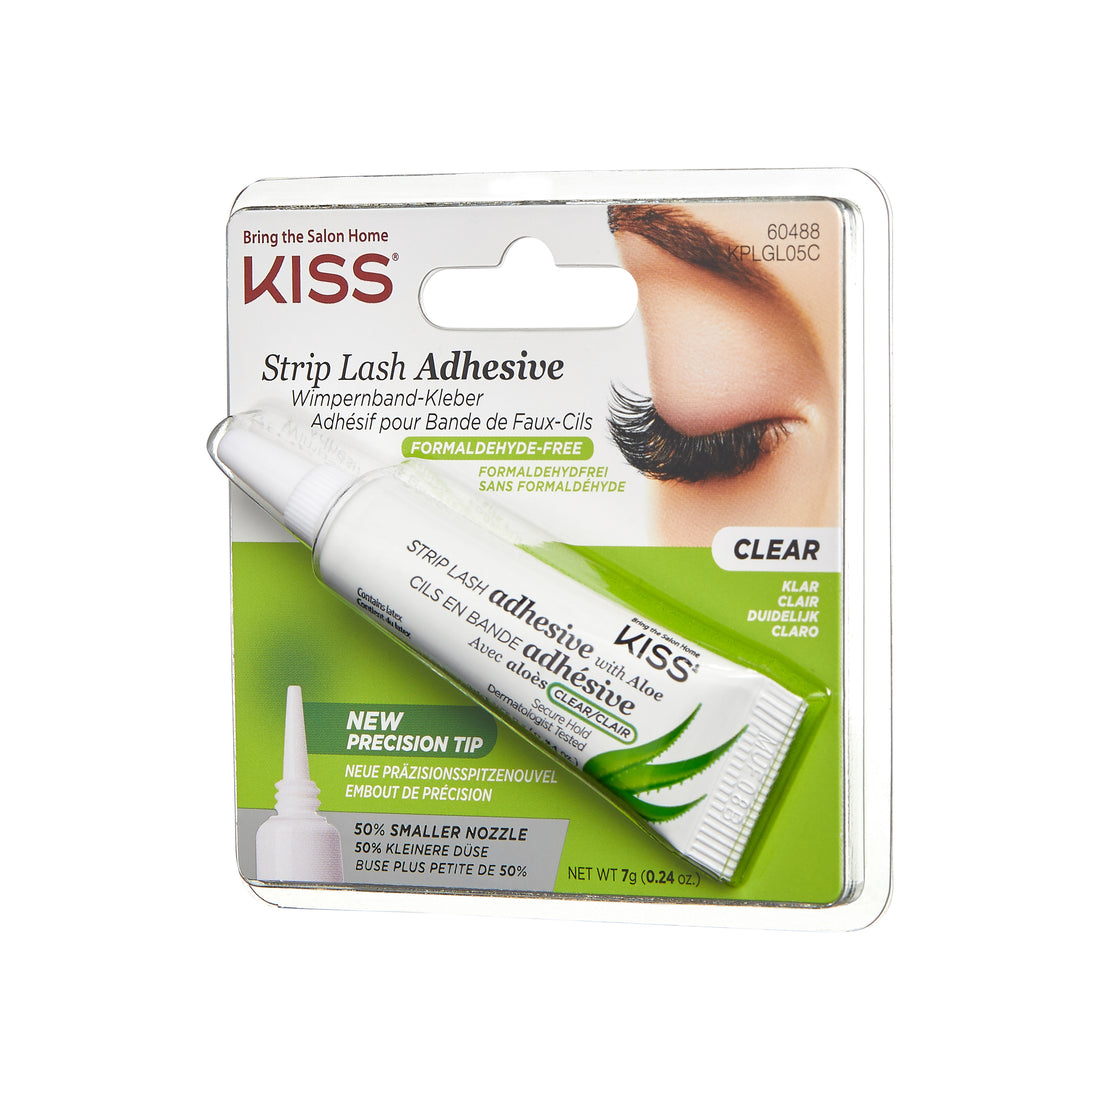 KISS EverEz Aloe Vera Strip Lash Adhesive, Net Wt. 7g (0.24 oz.) - Clear